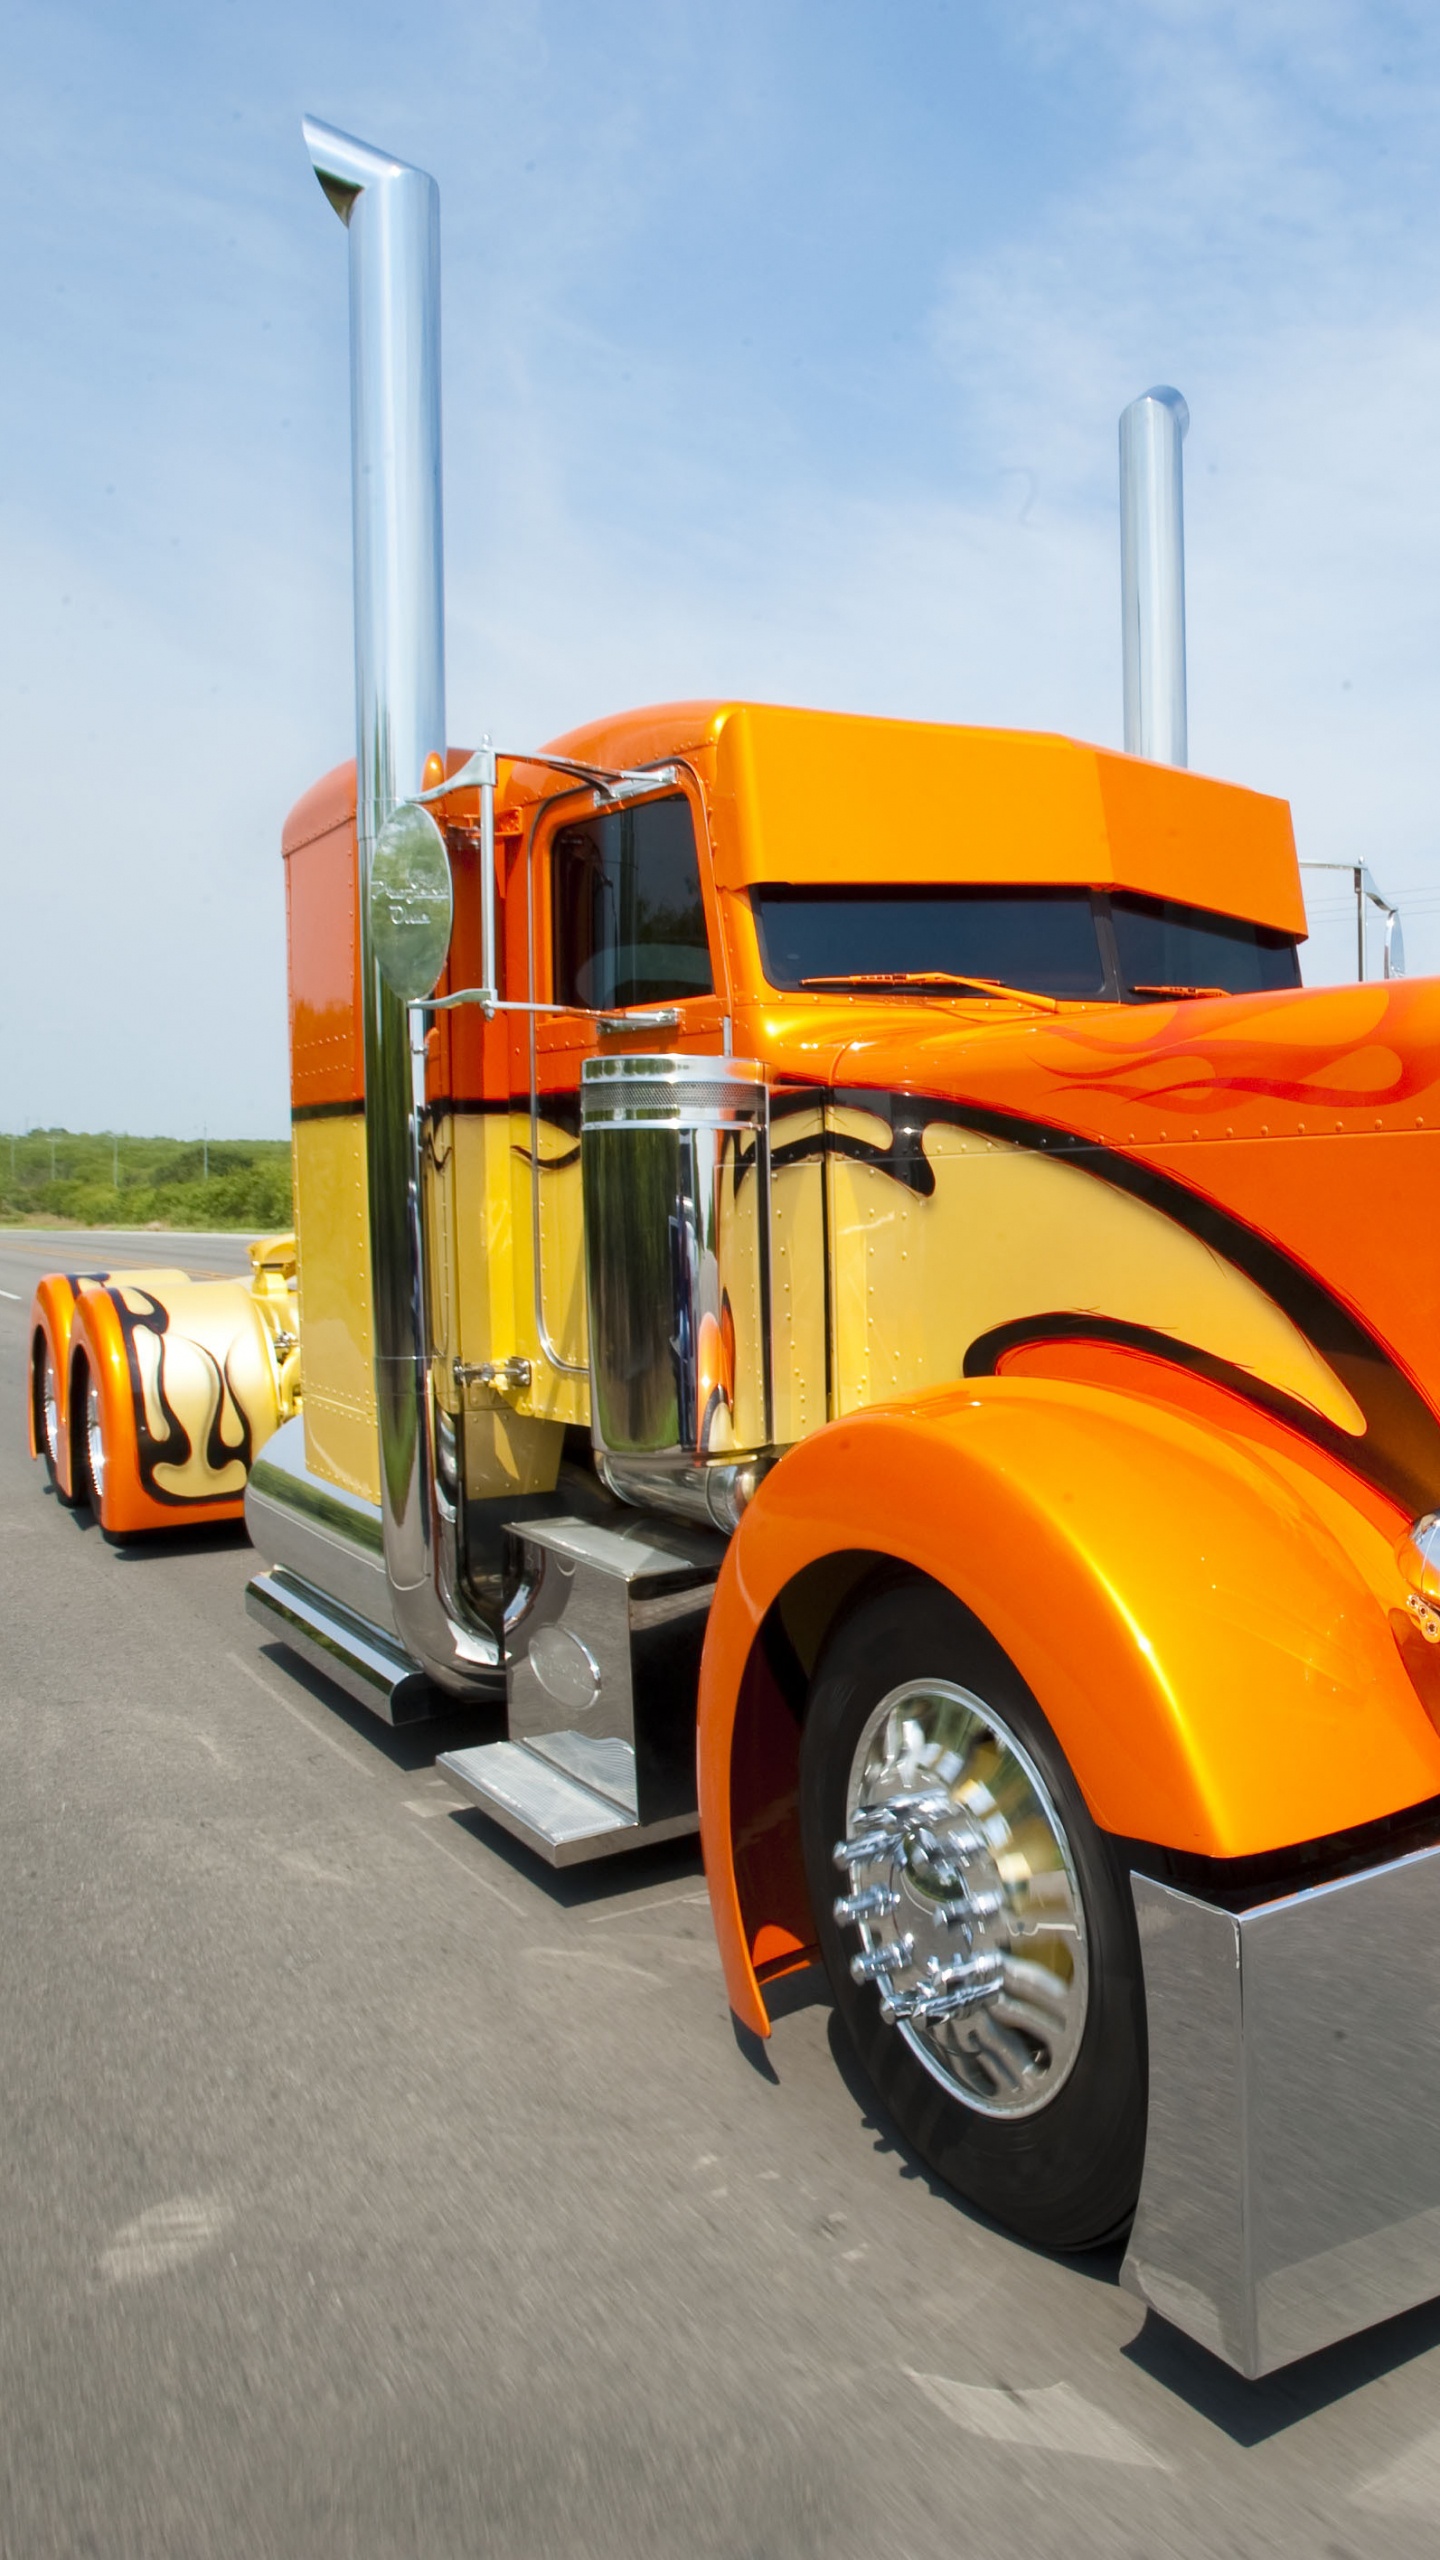 Orange Truck on Road During Daytime. Wallpaper in 1440x2560 Resolution